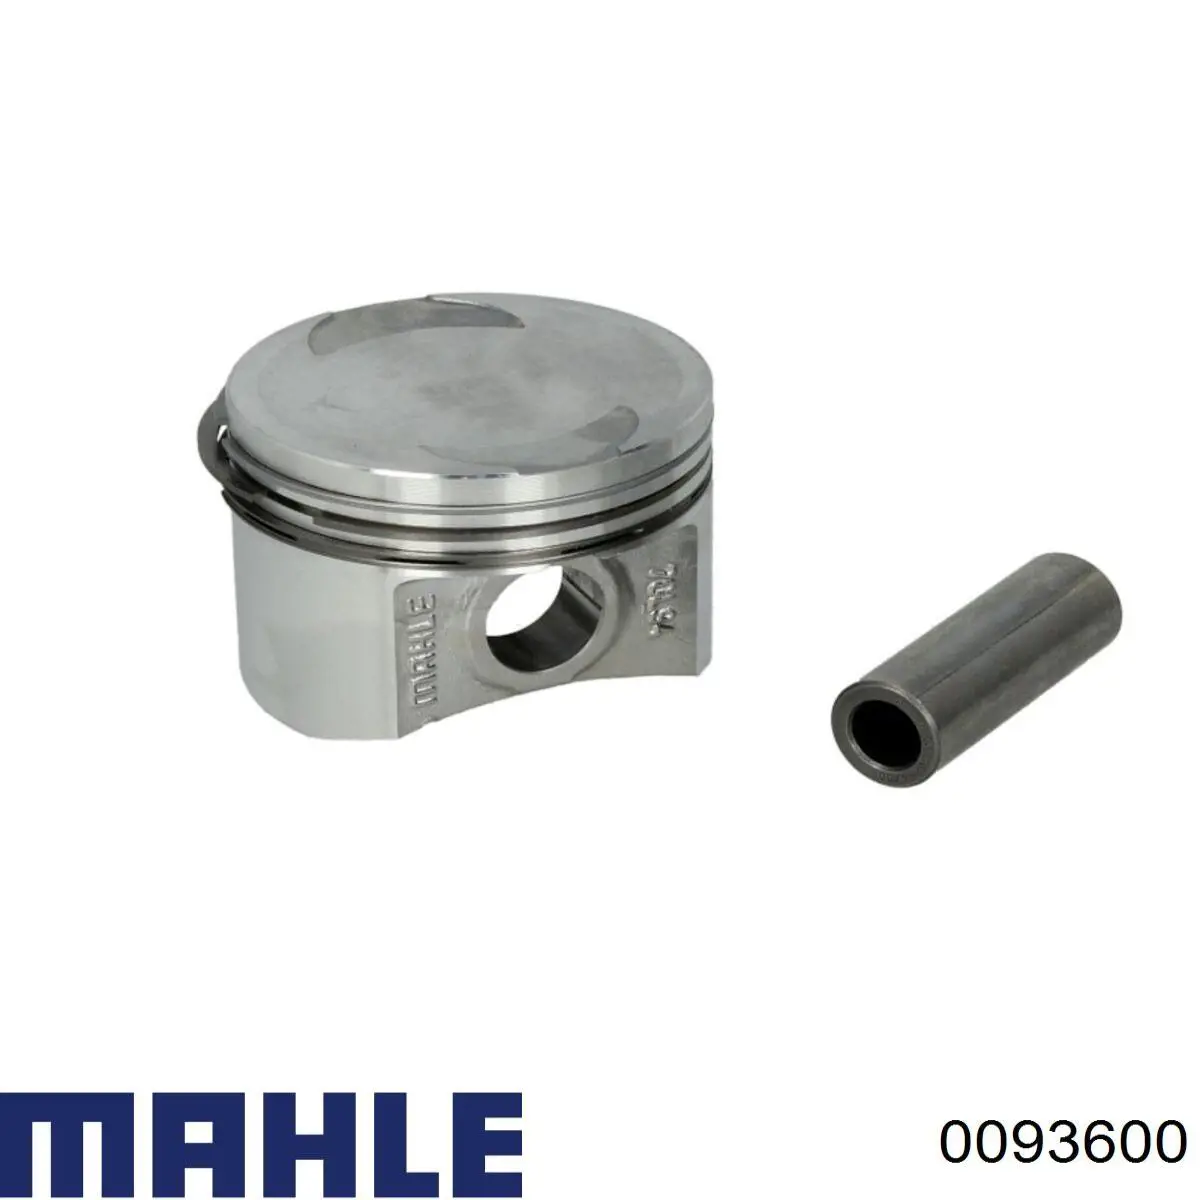 0093600 Knecht-Mahle поршень в комплекте на 1 цилиндр, std